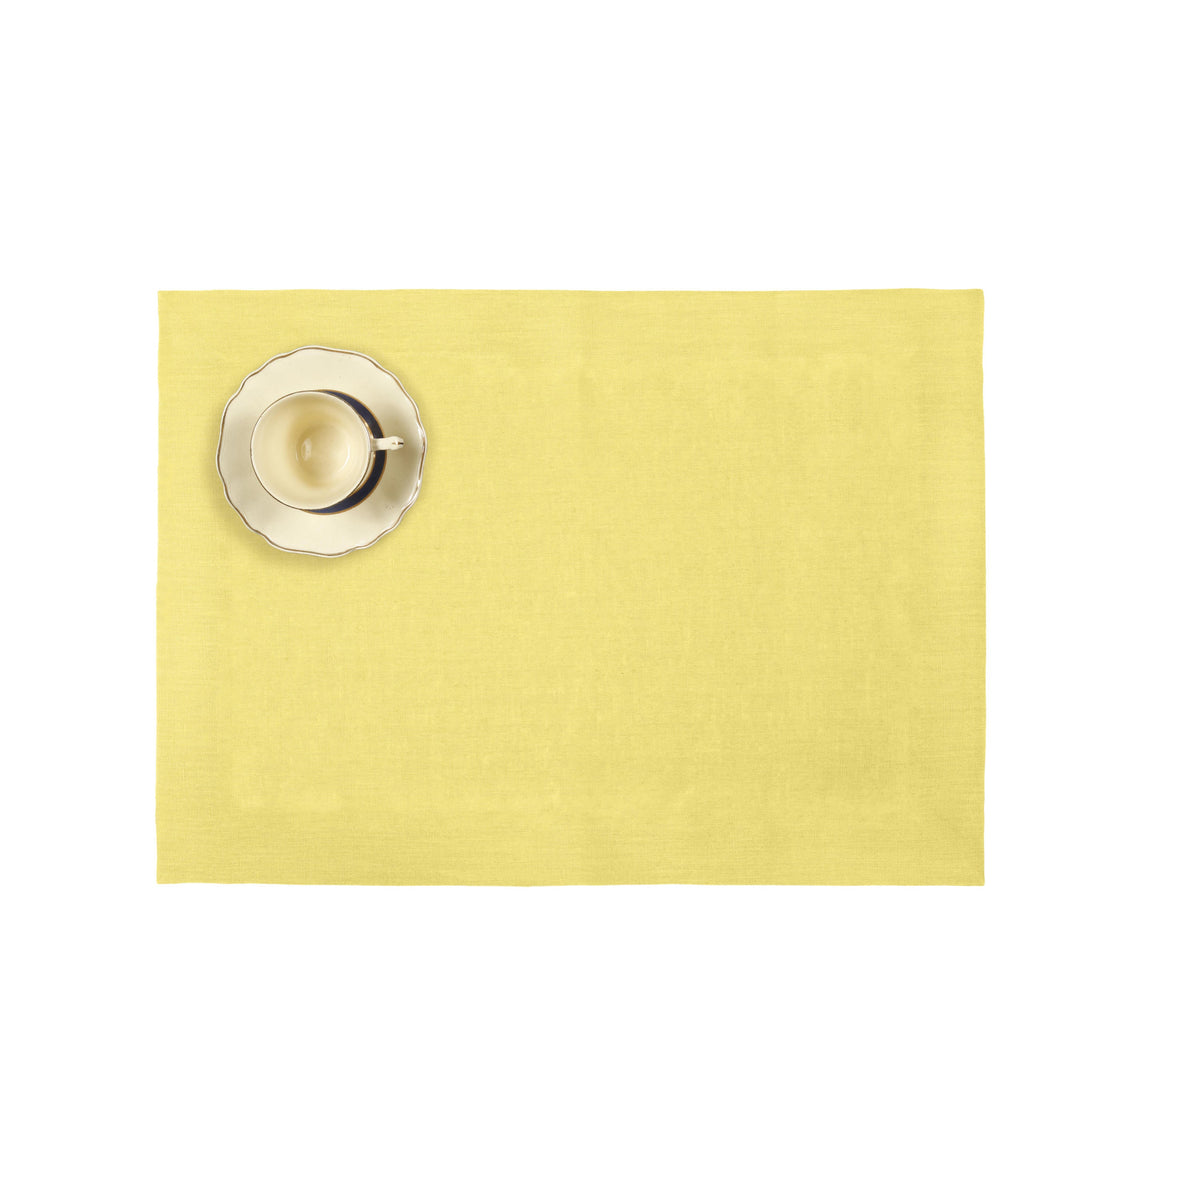 Lemon Yellow Linen Placemats  14 x 19 Inch Set of 4 - Hemmed